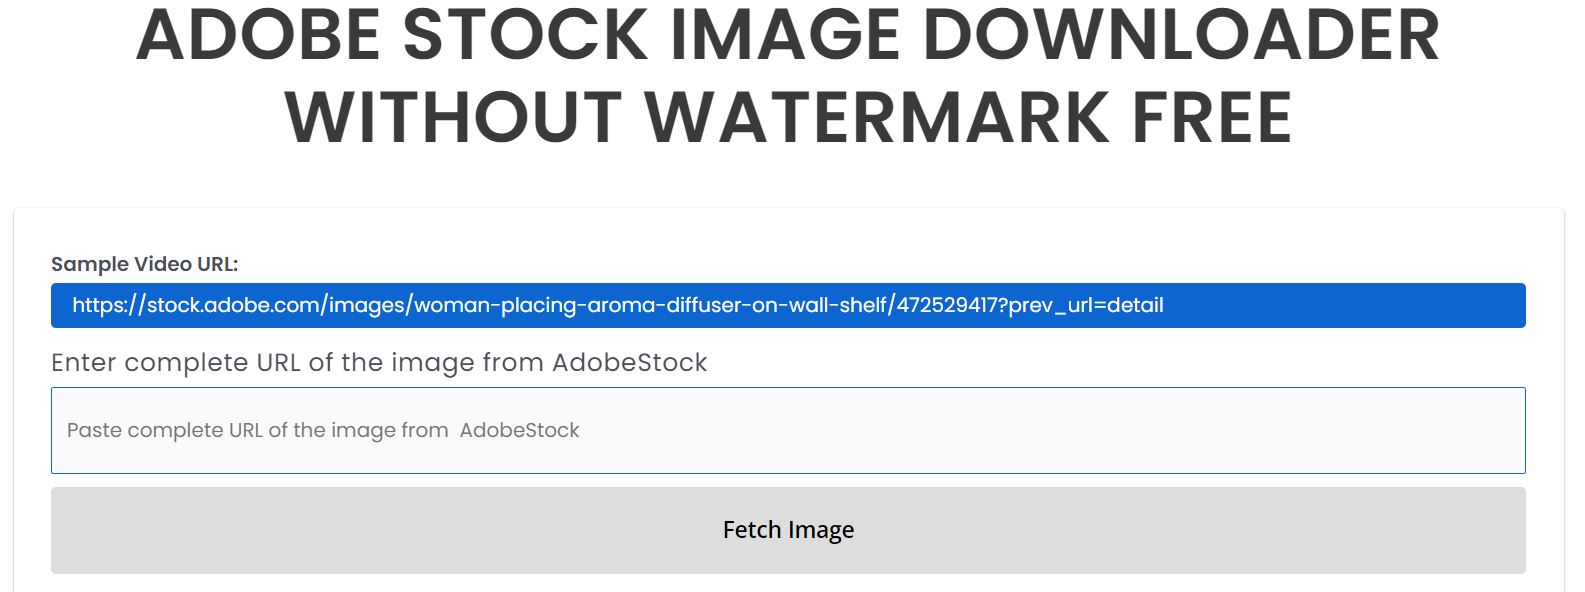 Adobe Stock Image Downloader Without Watermark Free